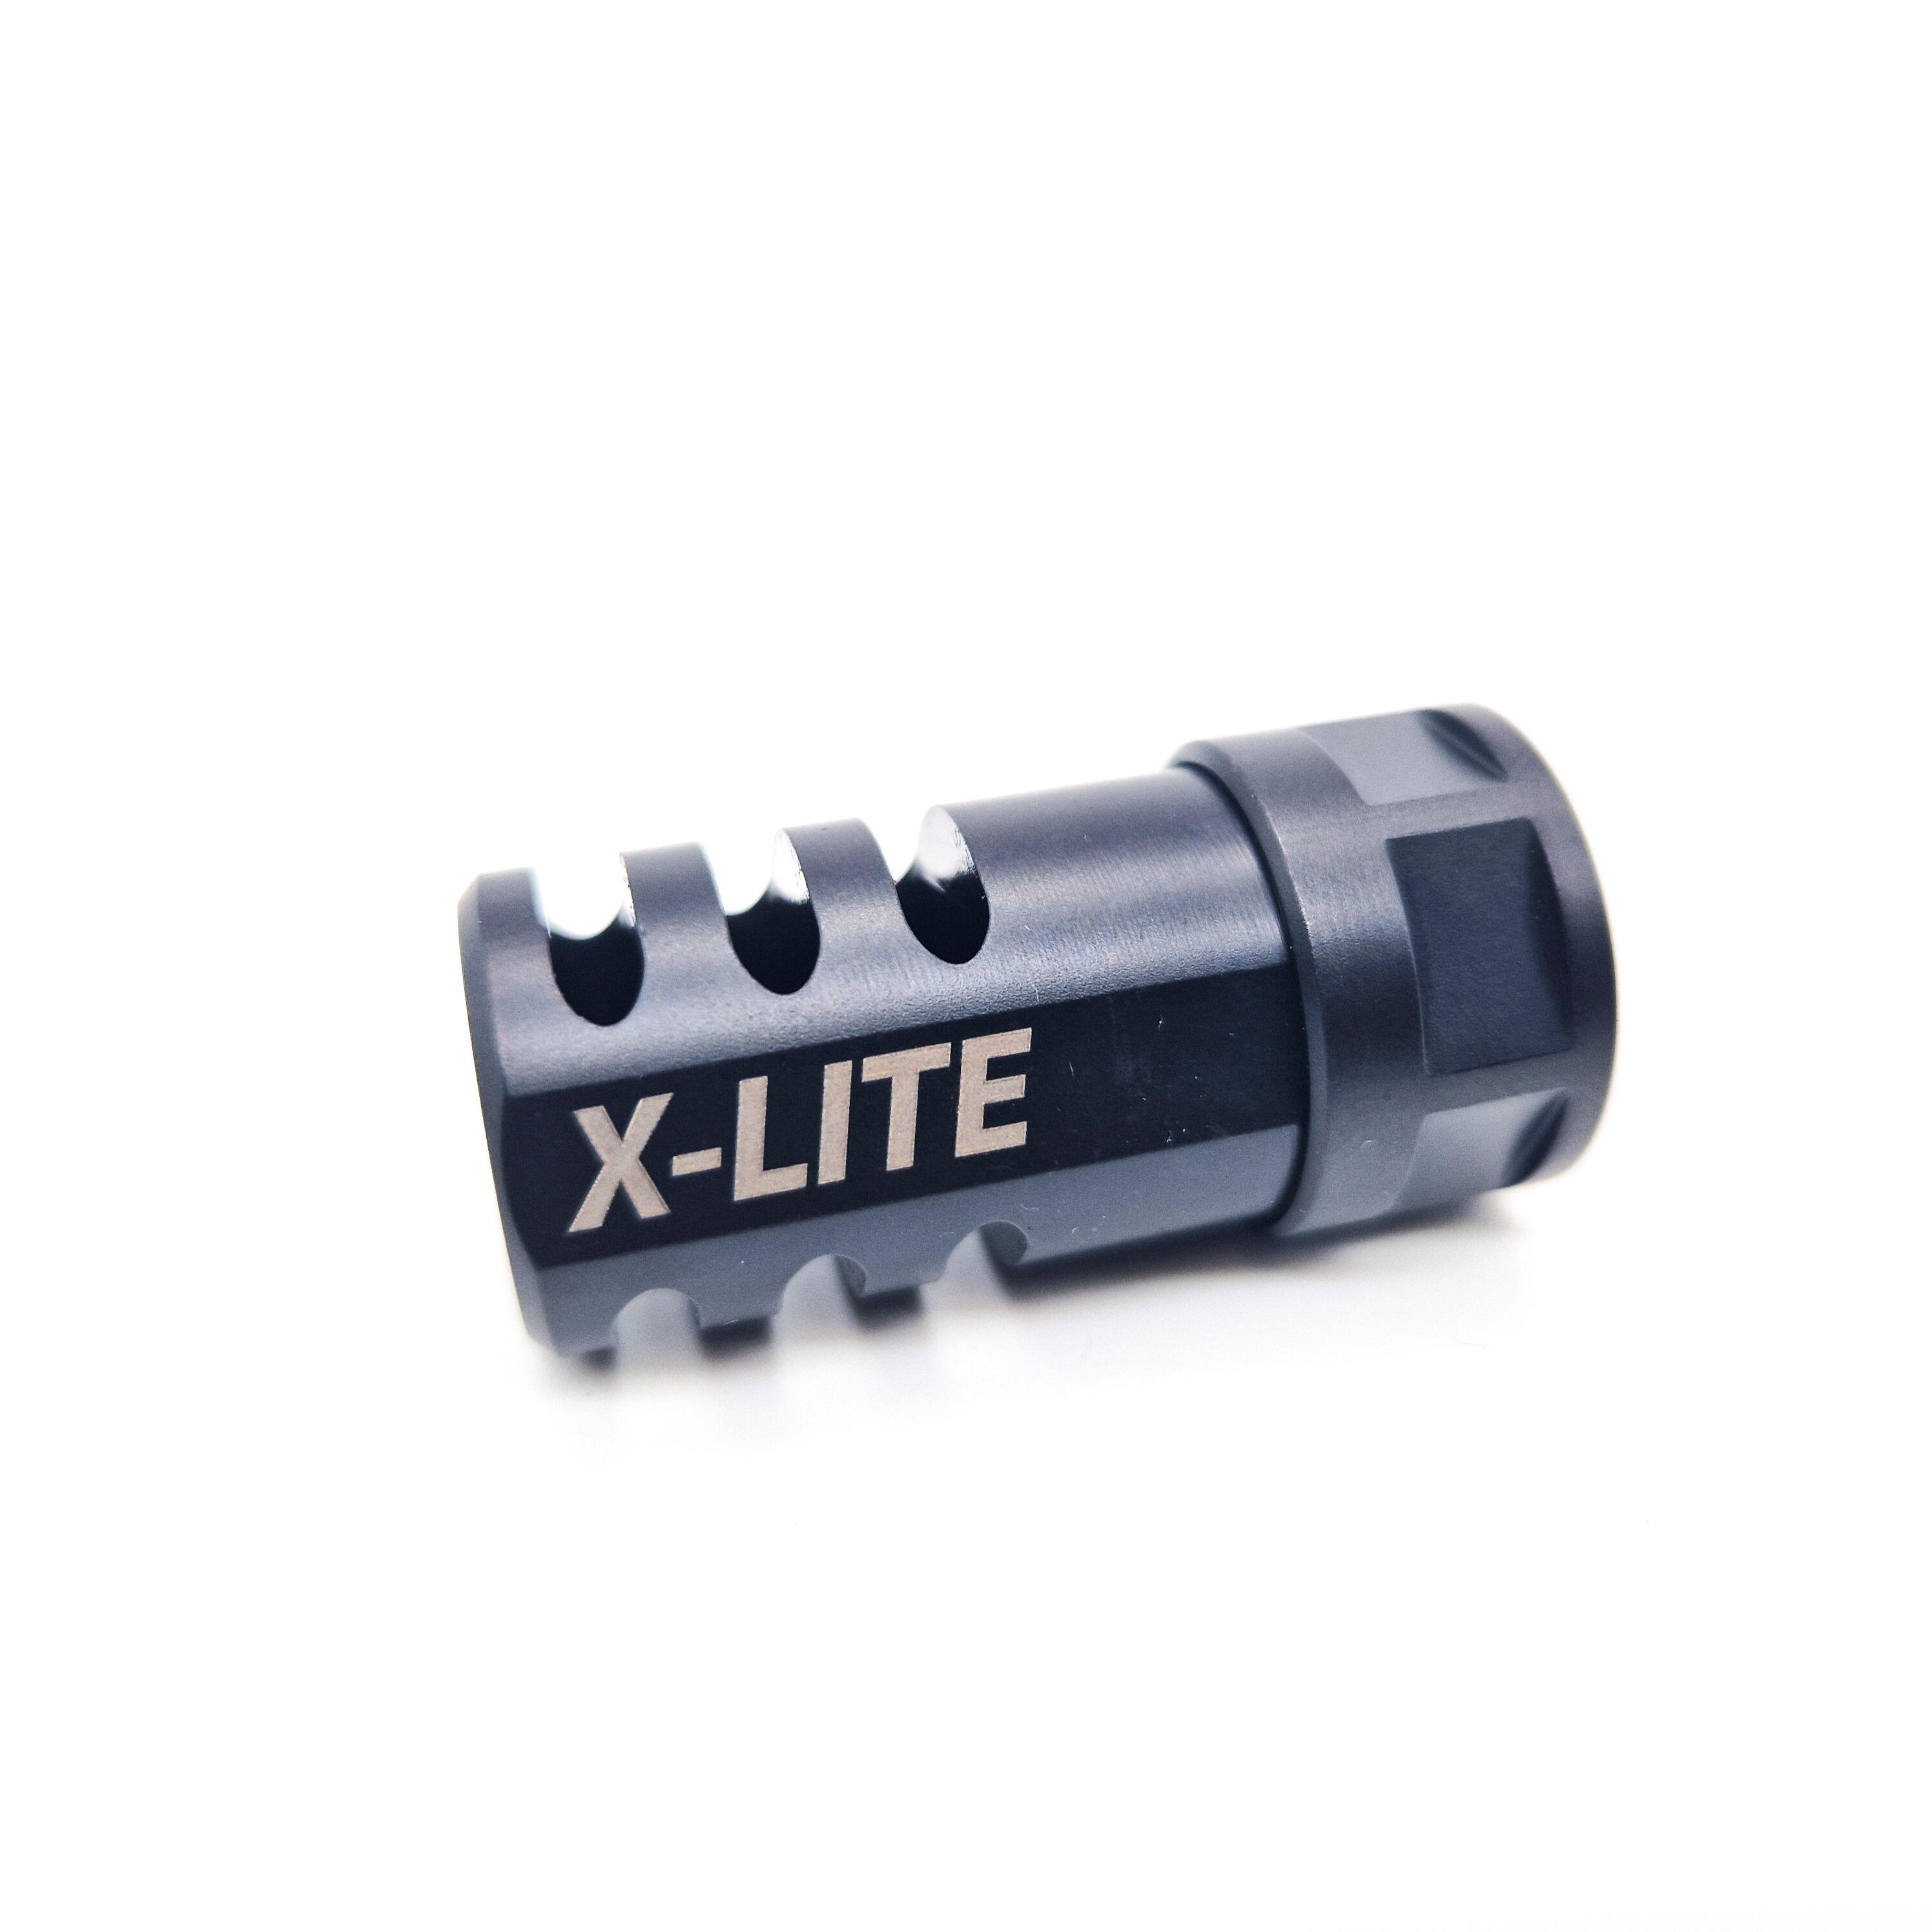 X-LITE Muzzle Brake Image